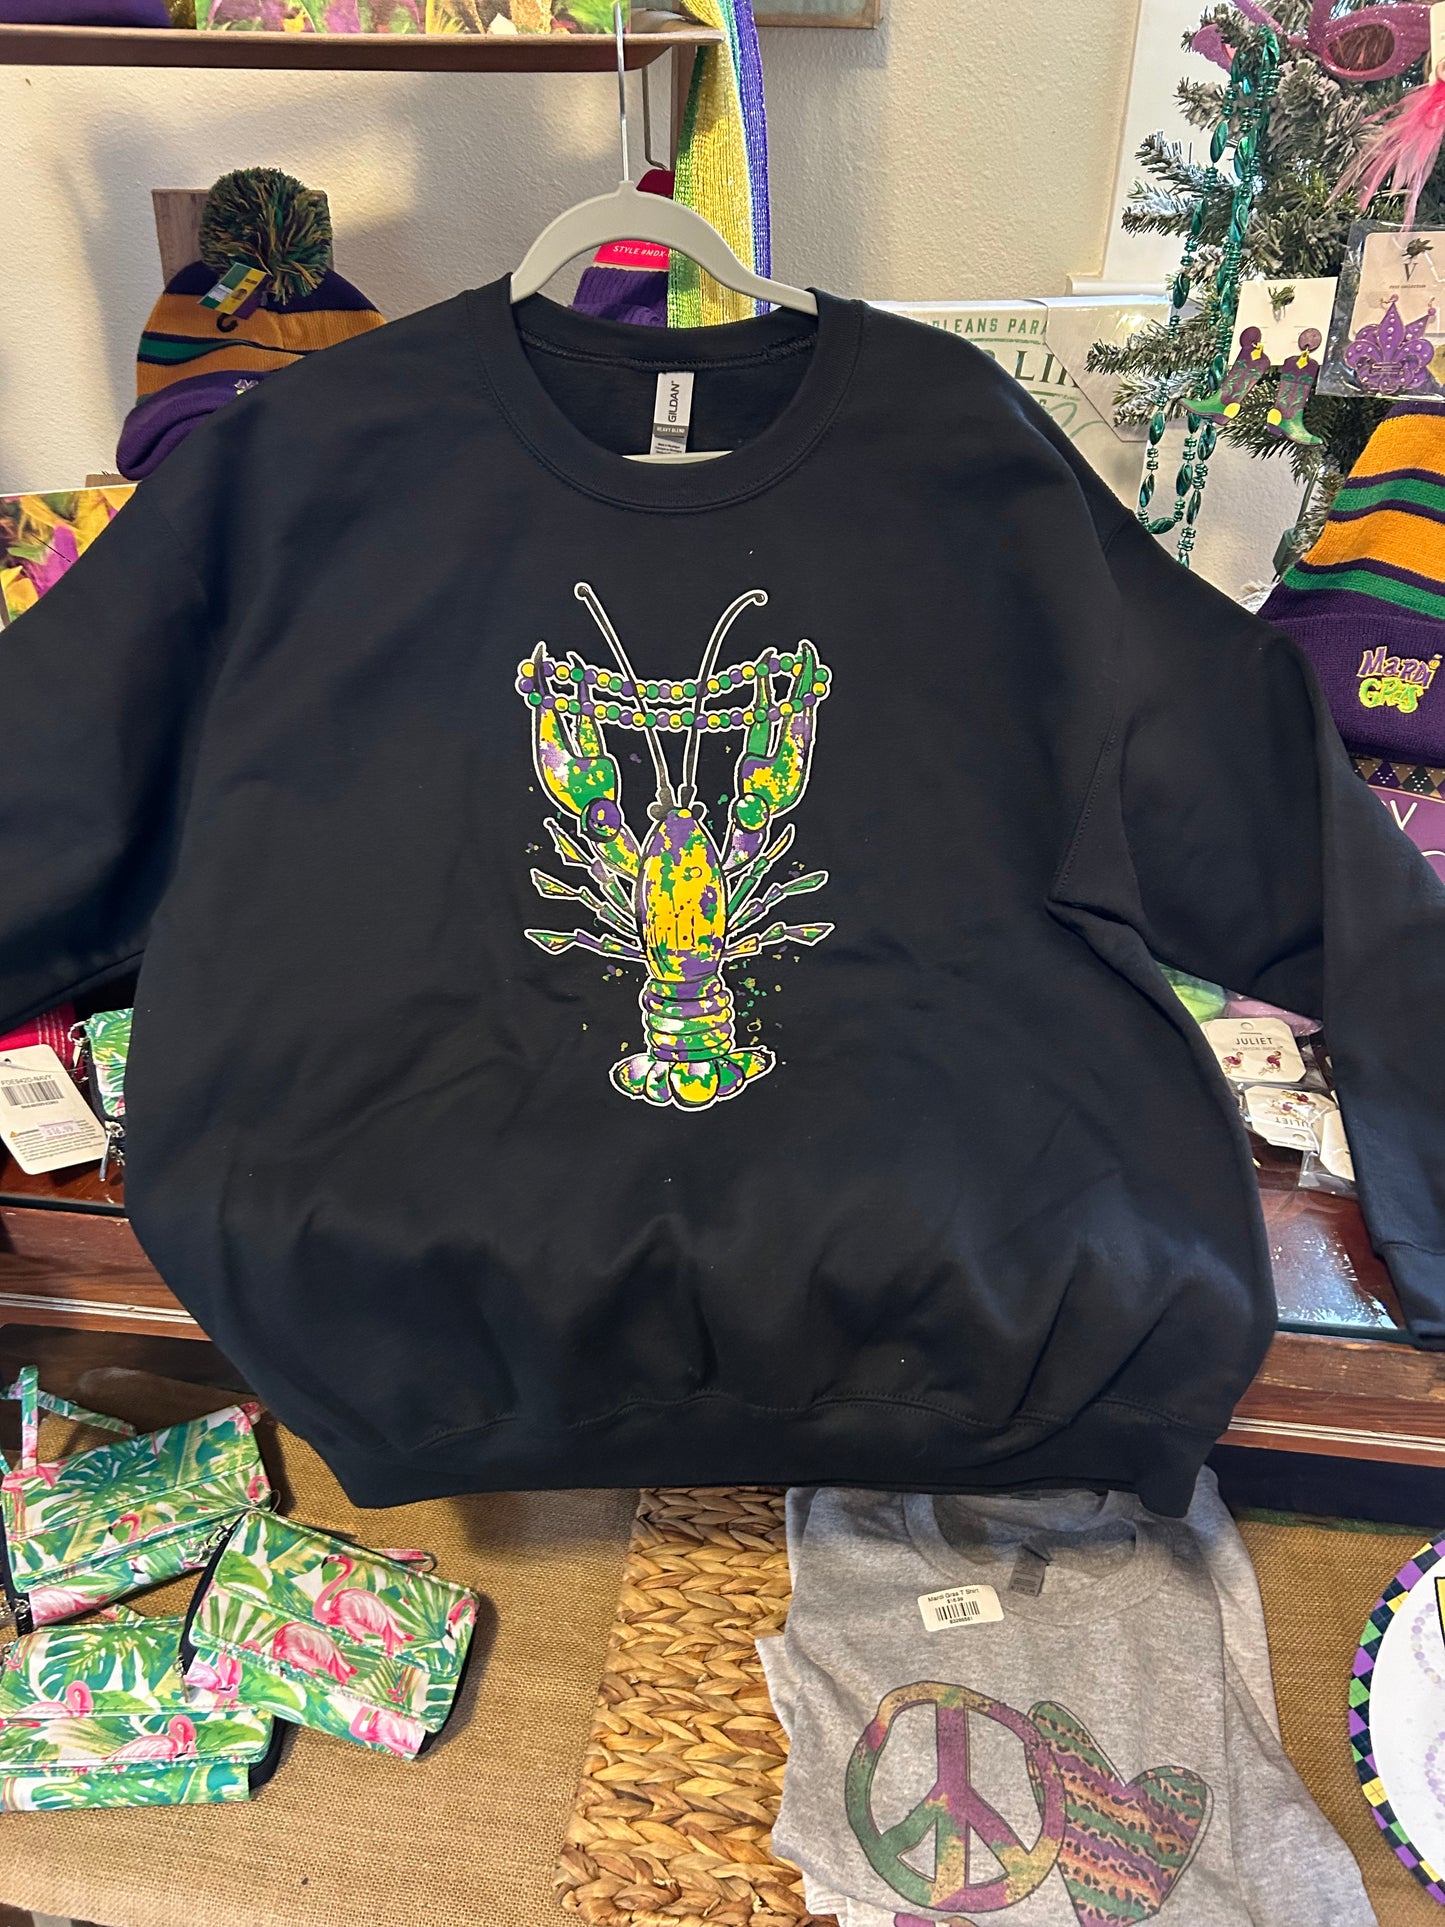 Black sweatshirt with Mardi Gras crawfish